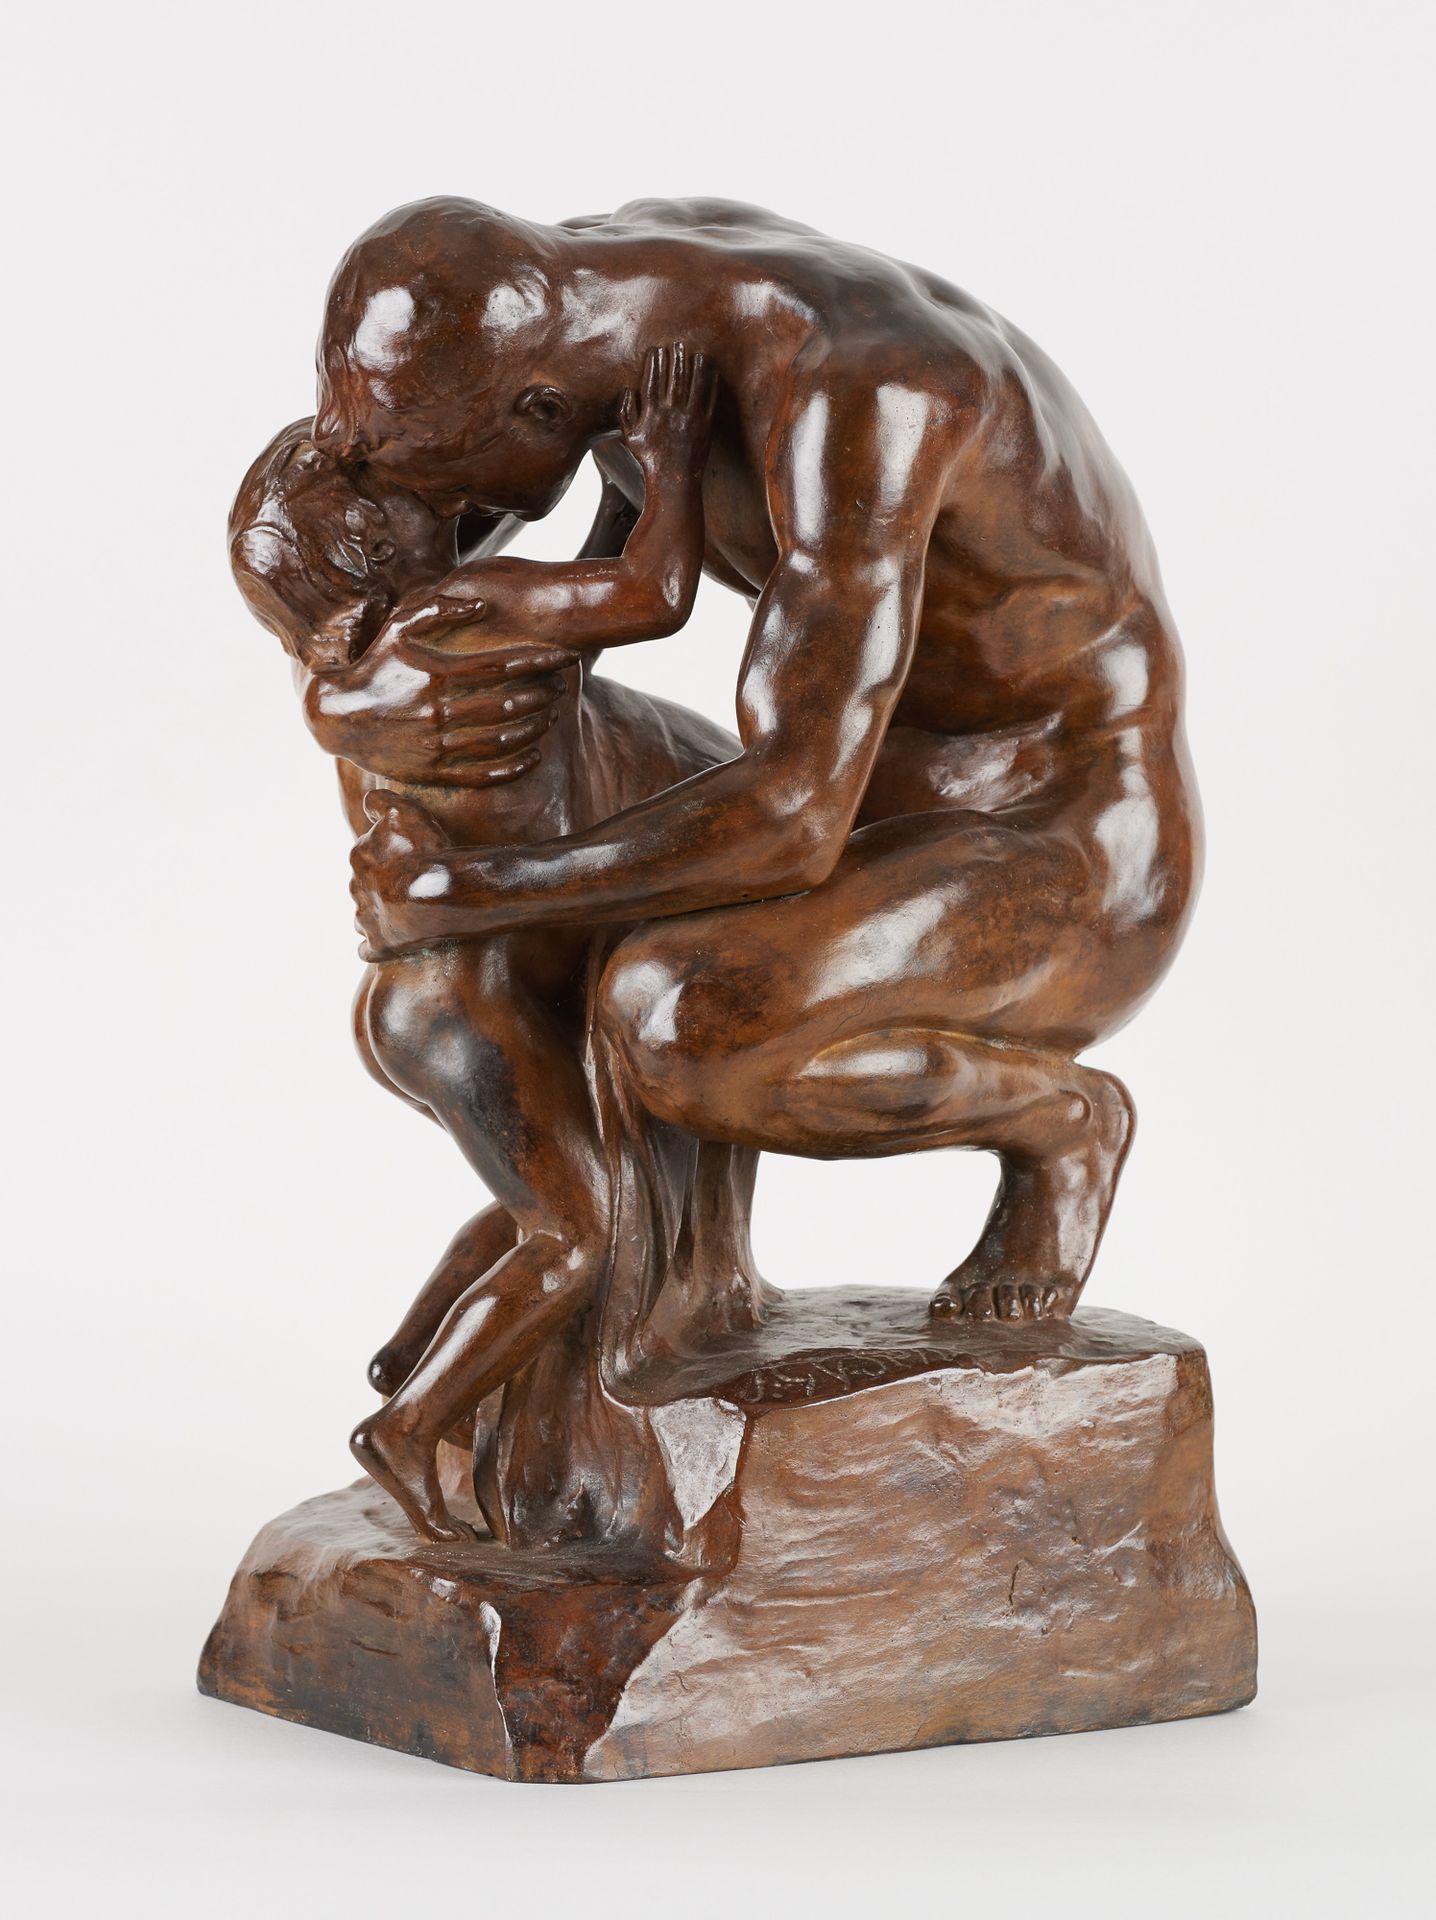 Fernand GYSEN École belge (1879-1943) 棕色铜质雕塑：孝心。

签名：F. Gysen。

尺寸：高52厘米。